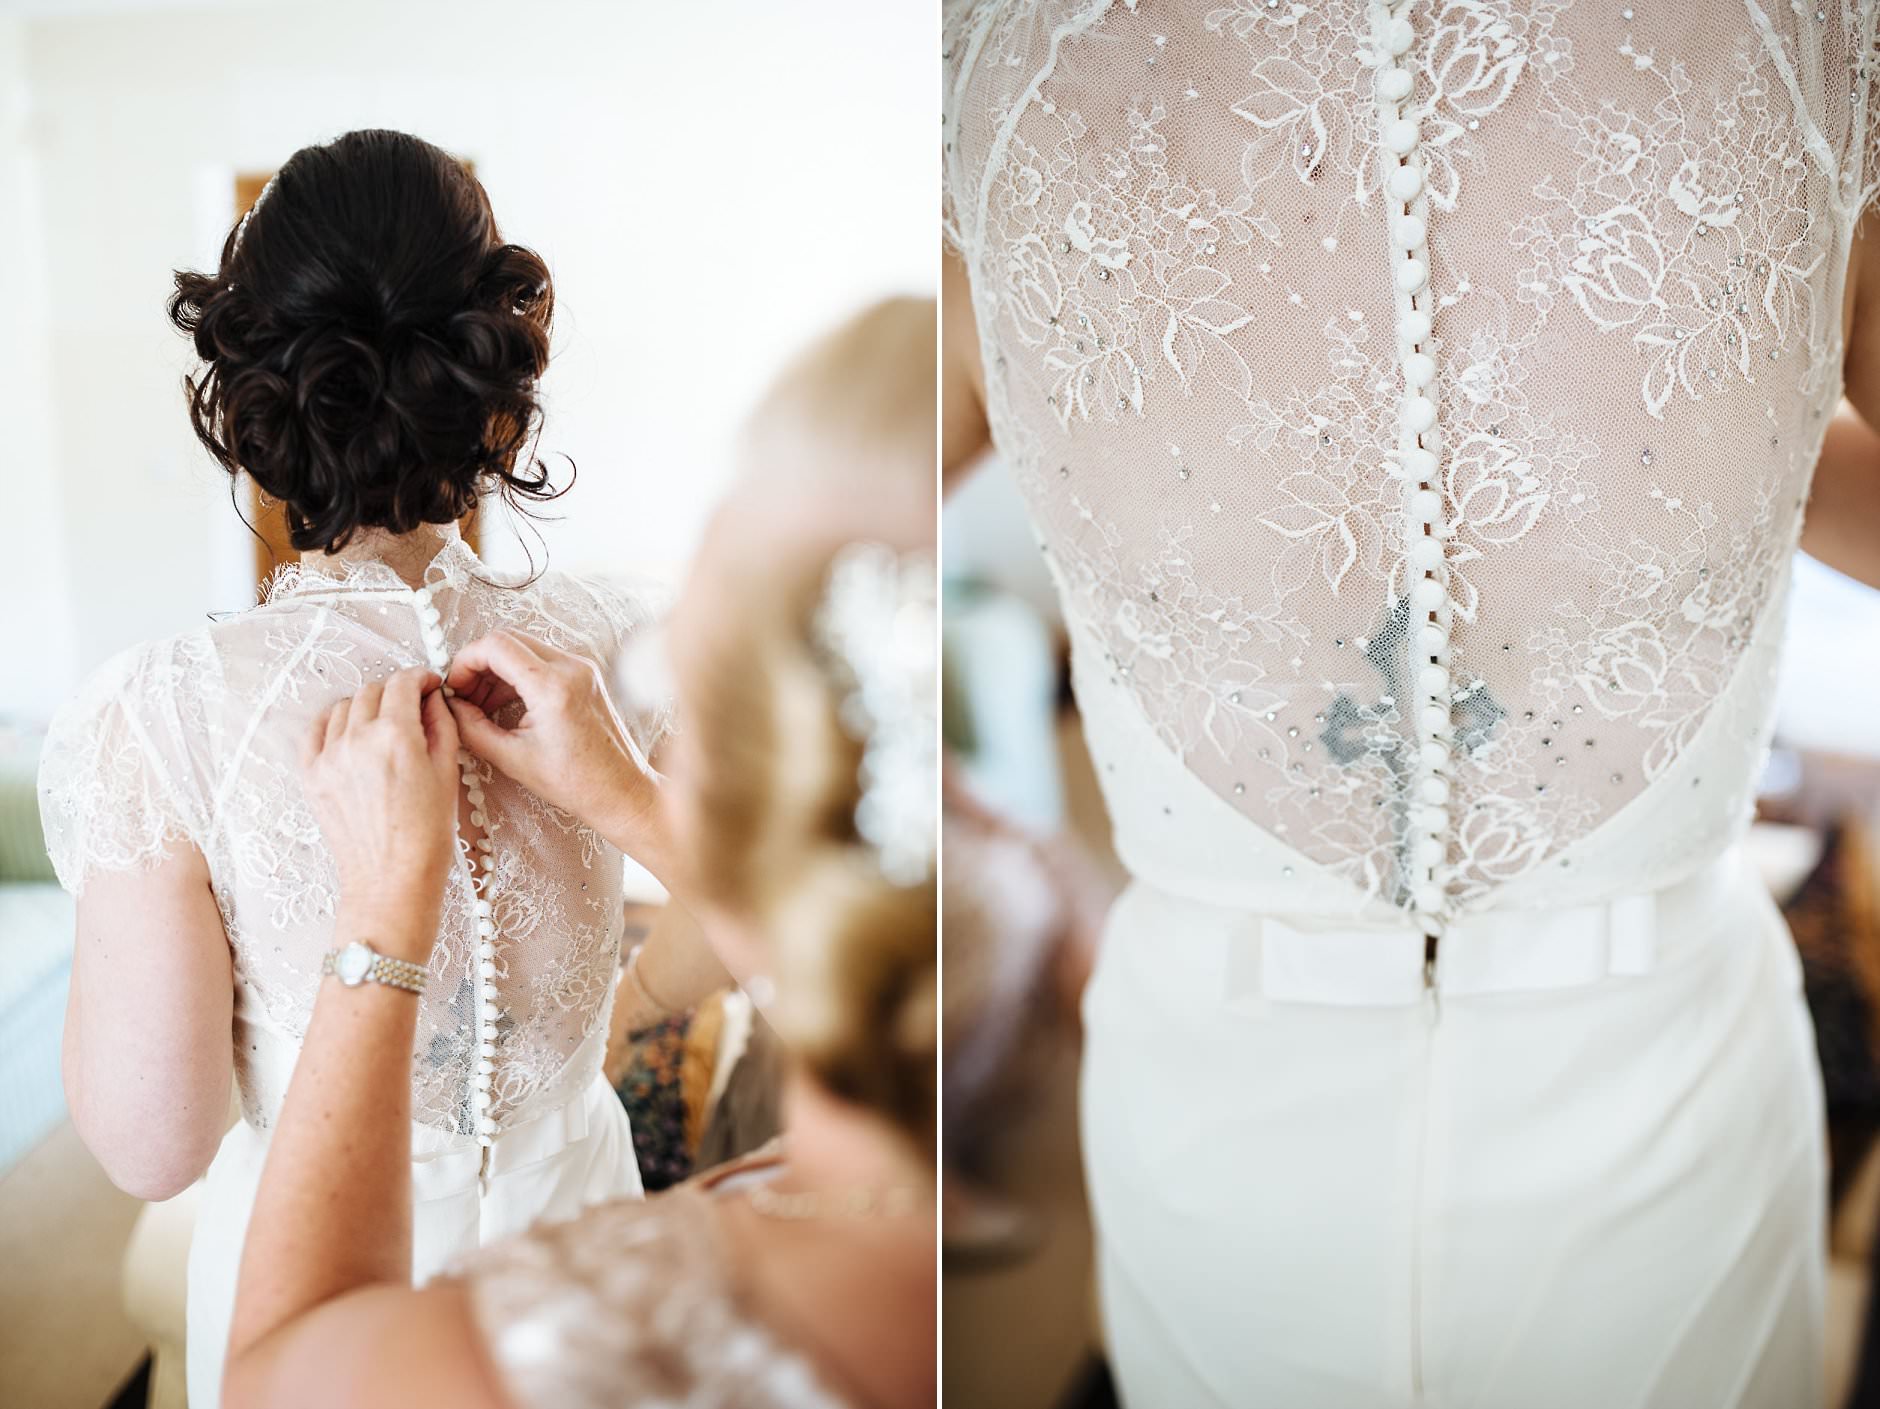 close-up of the bride's wedding dress